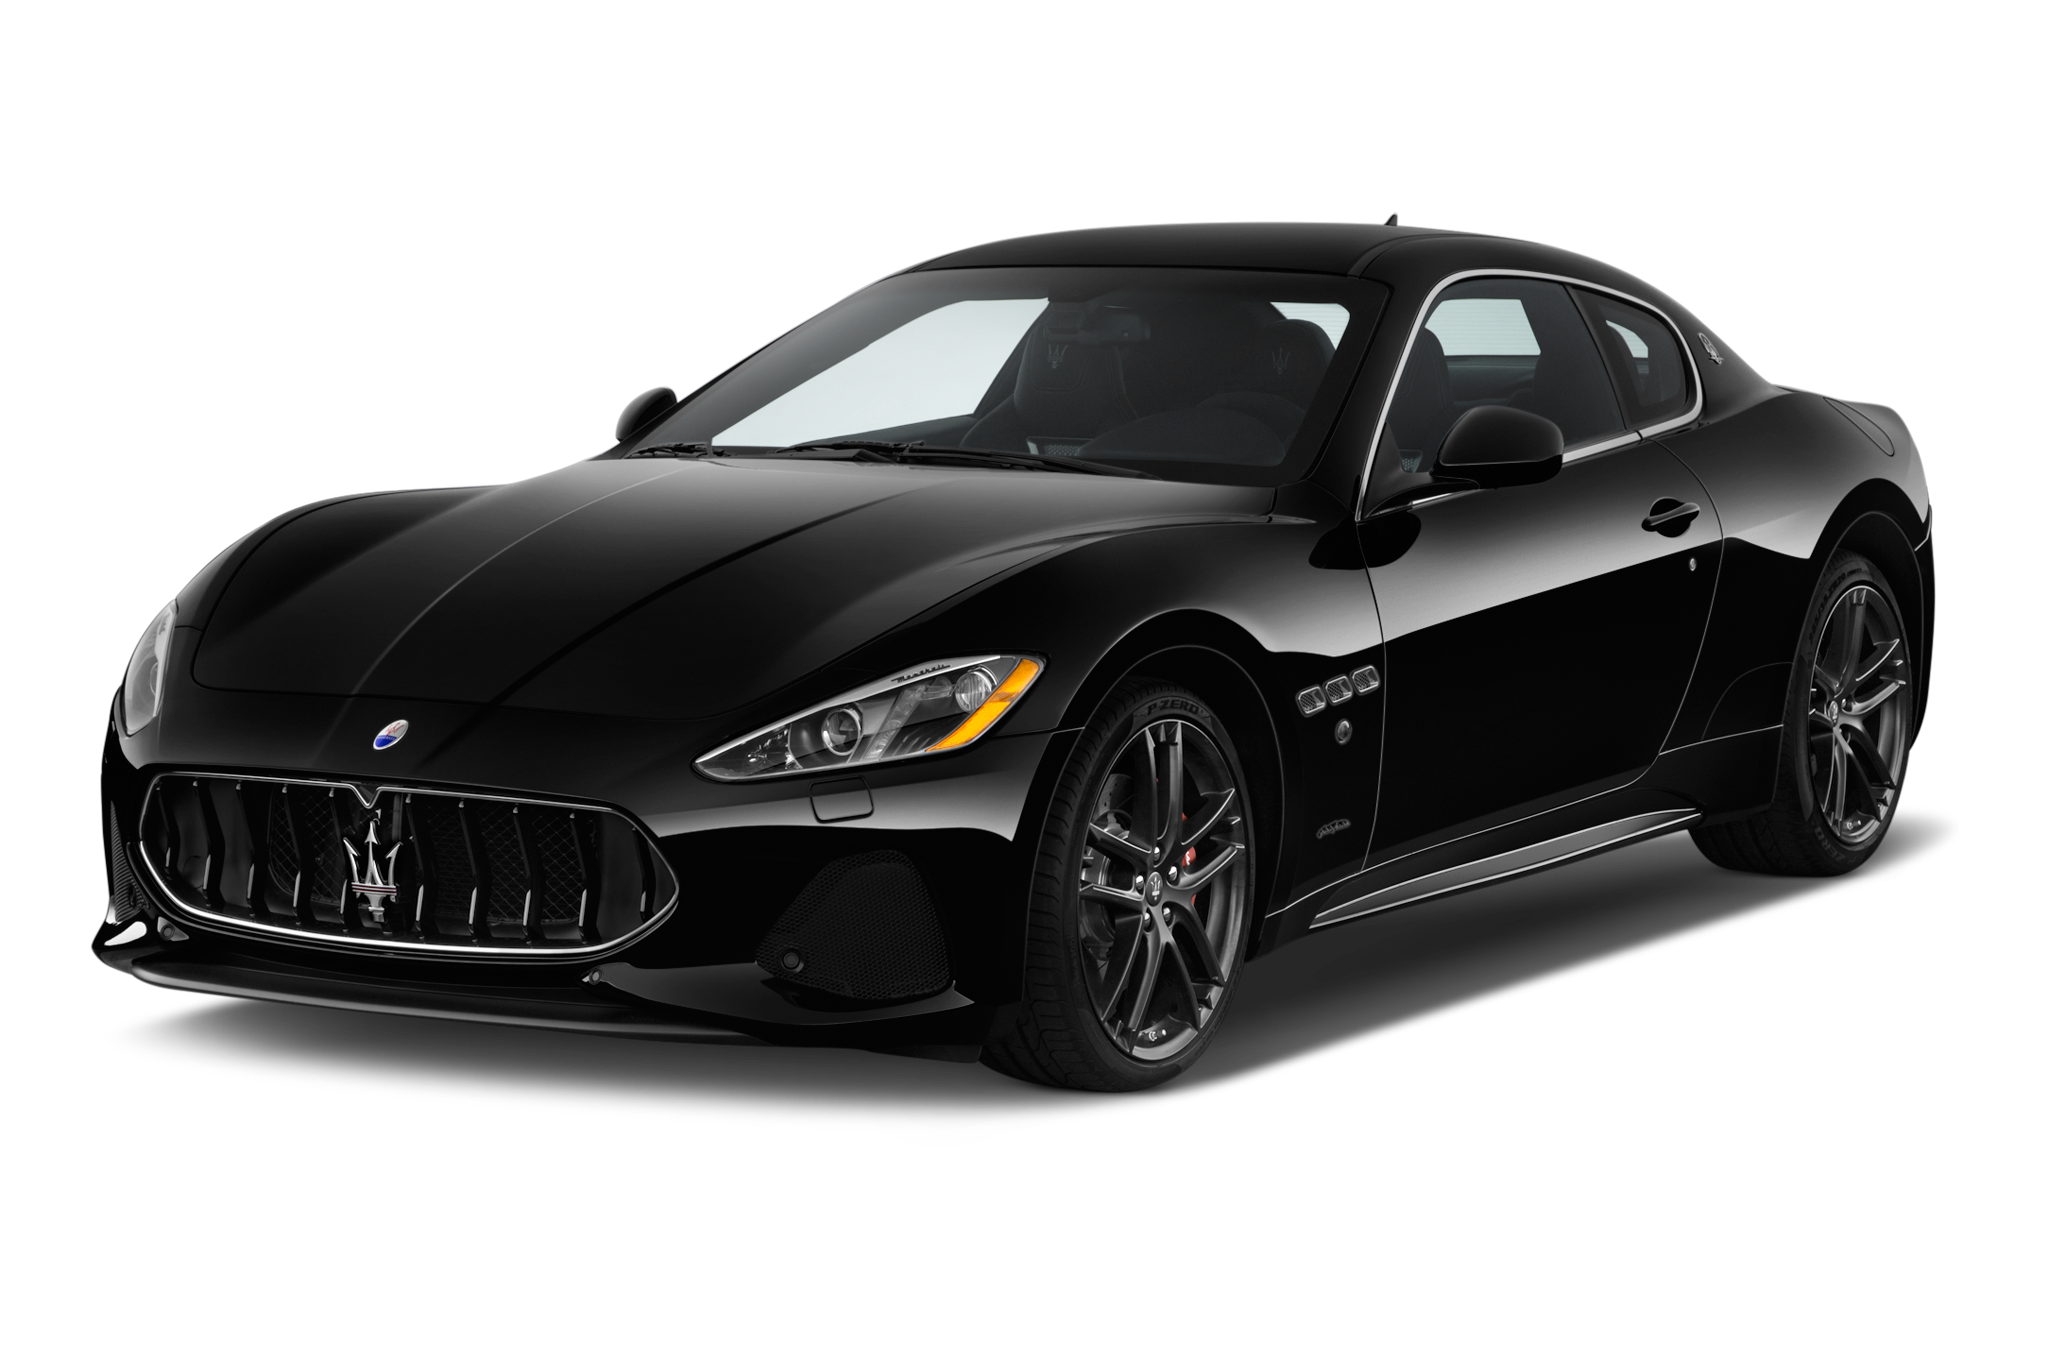 2018 Maserati GranTurismo Overview - MSN Autos